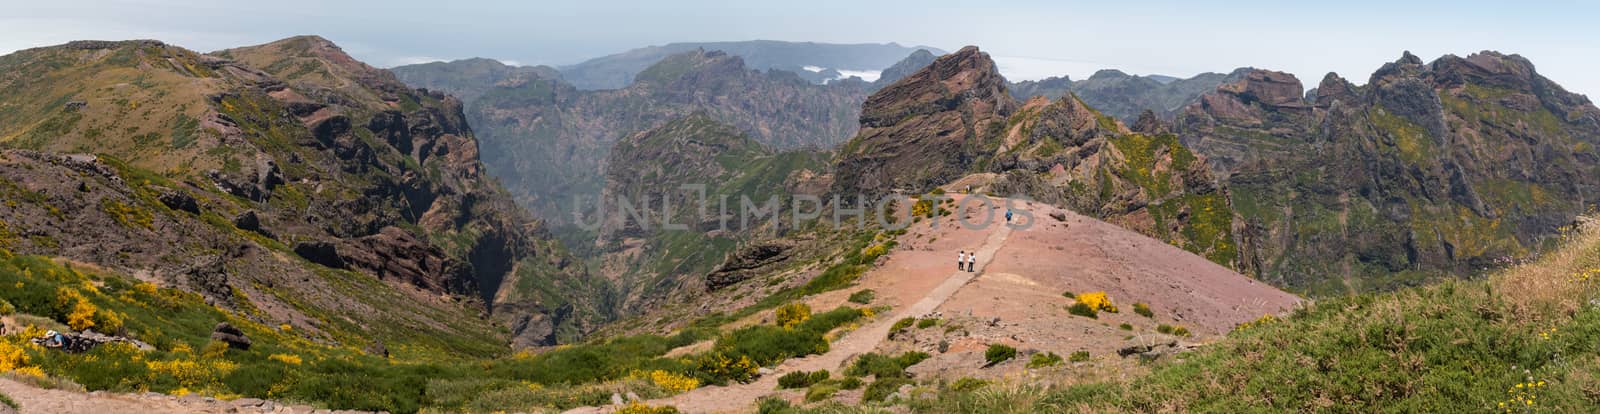 Pico do Arieiro mountain range viewpoint, located in Madeira island, Portugal.